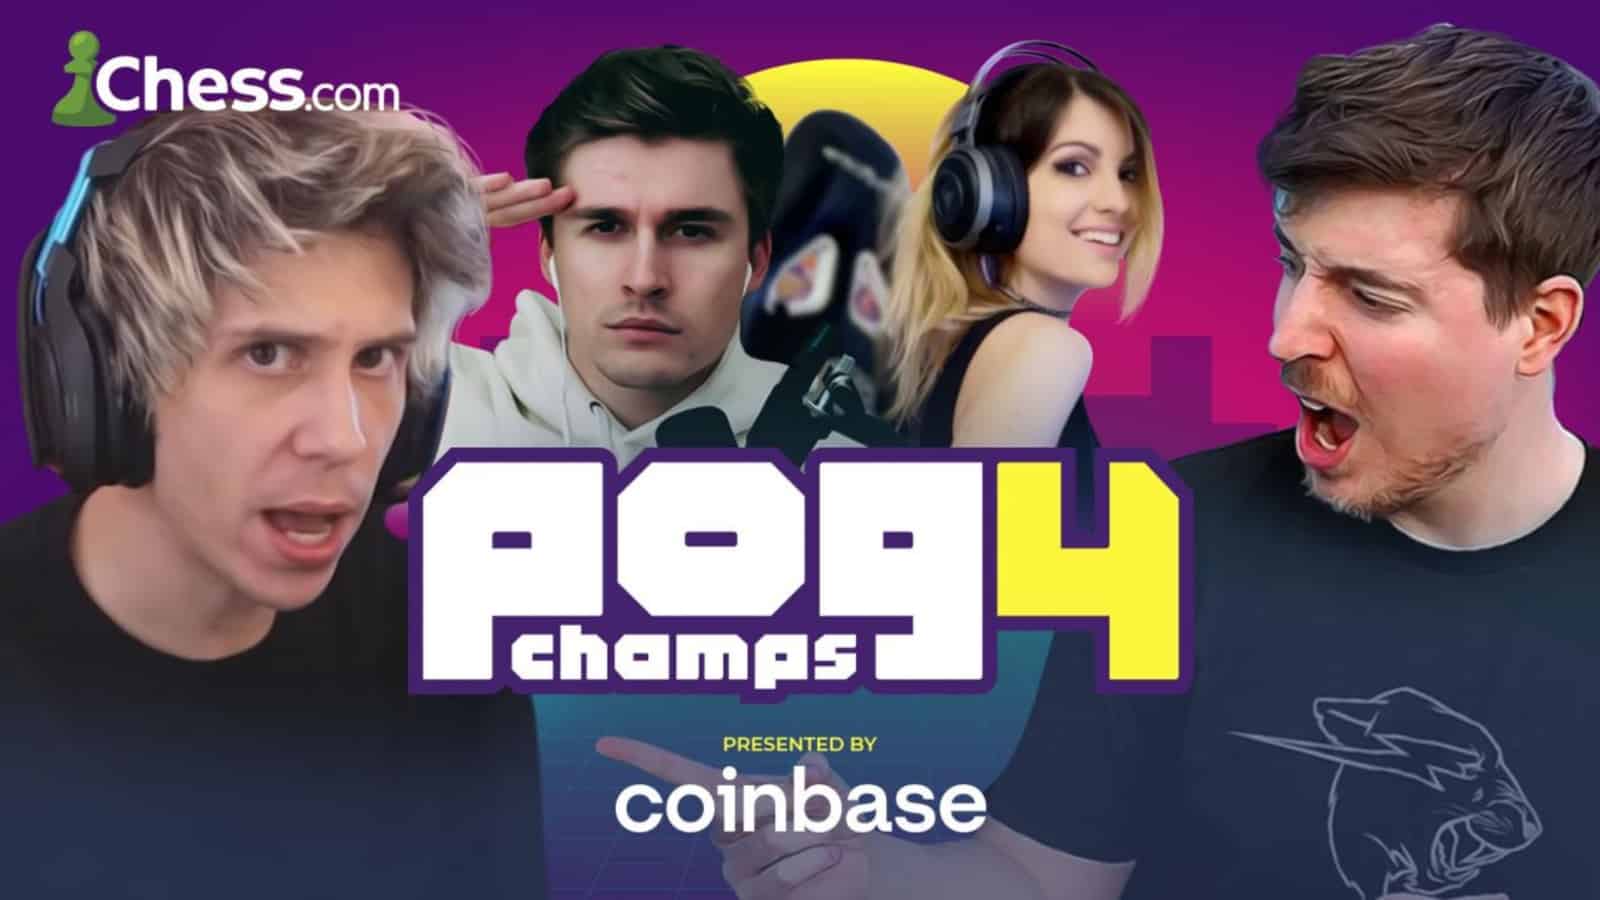 pogchamps4 chess tournament announced